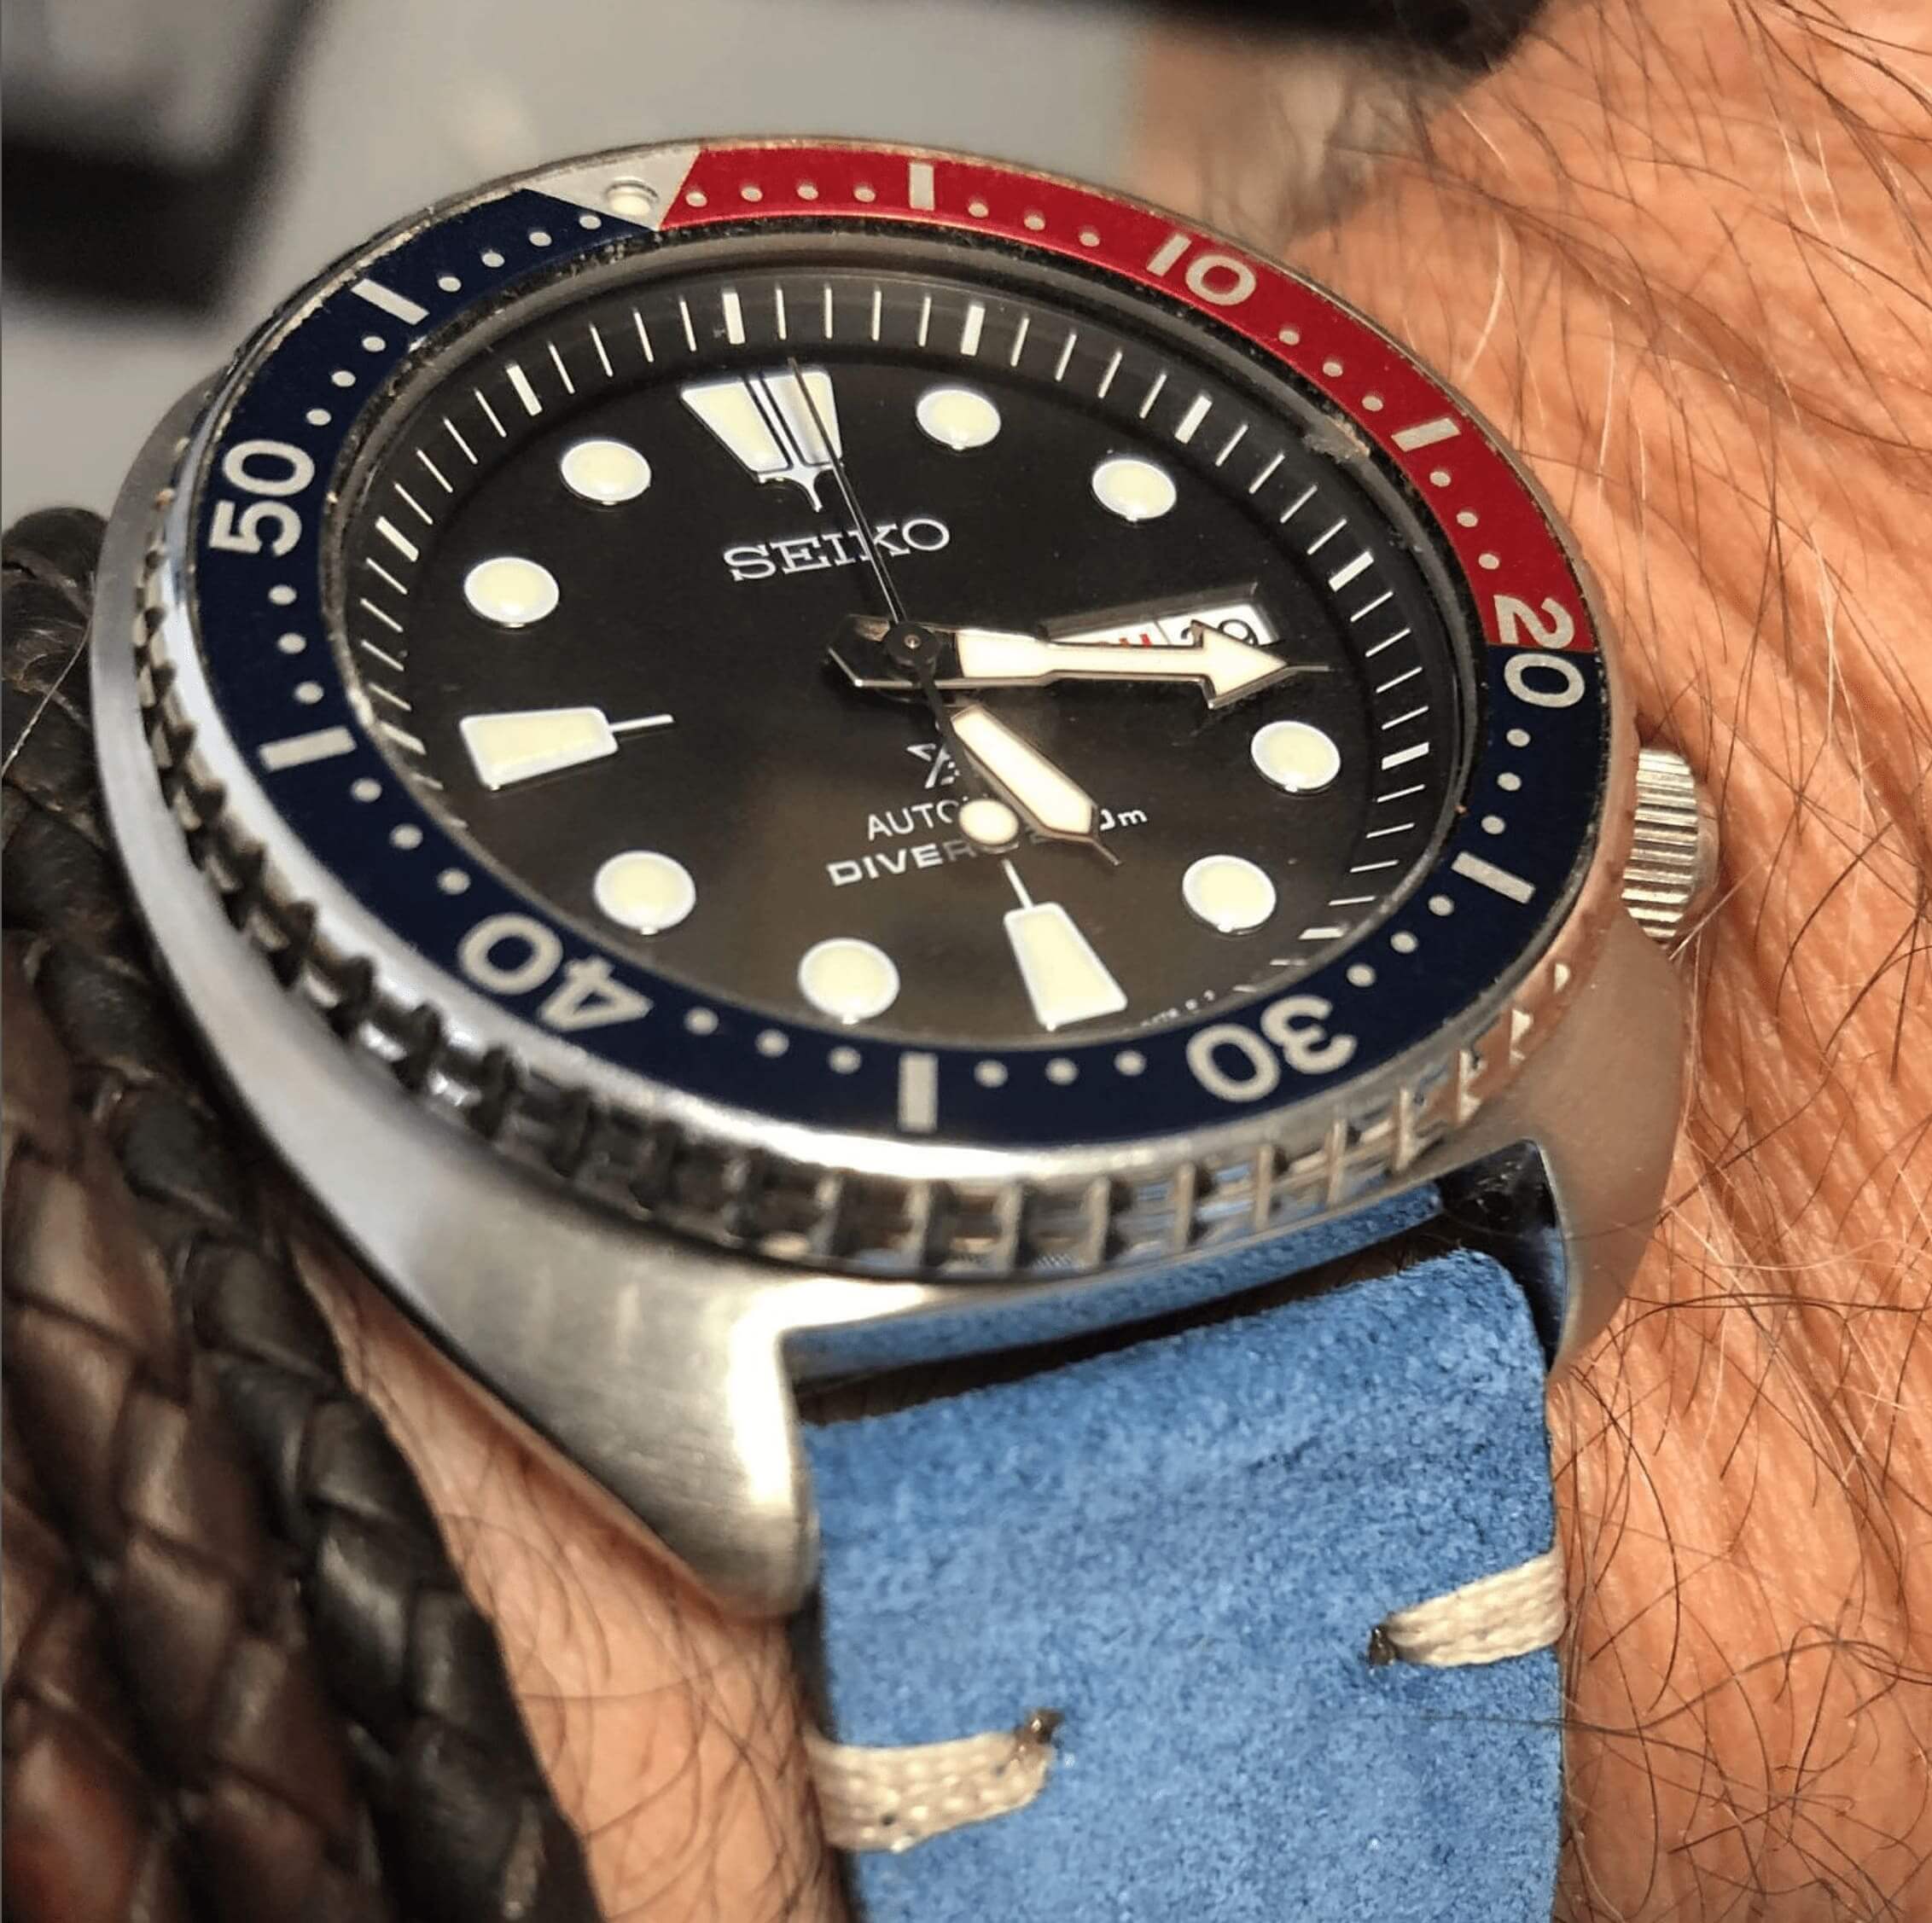 Light Blu Suede Vintage Leather Watch Strap-Suede strap-Milano Straps-Watch Bands